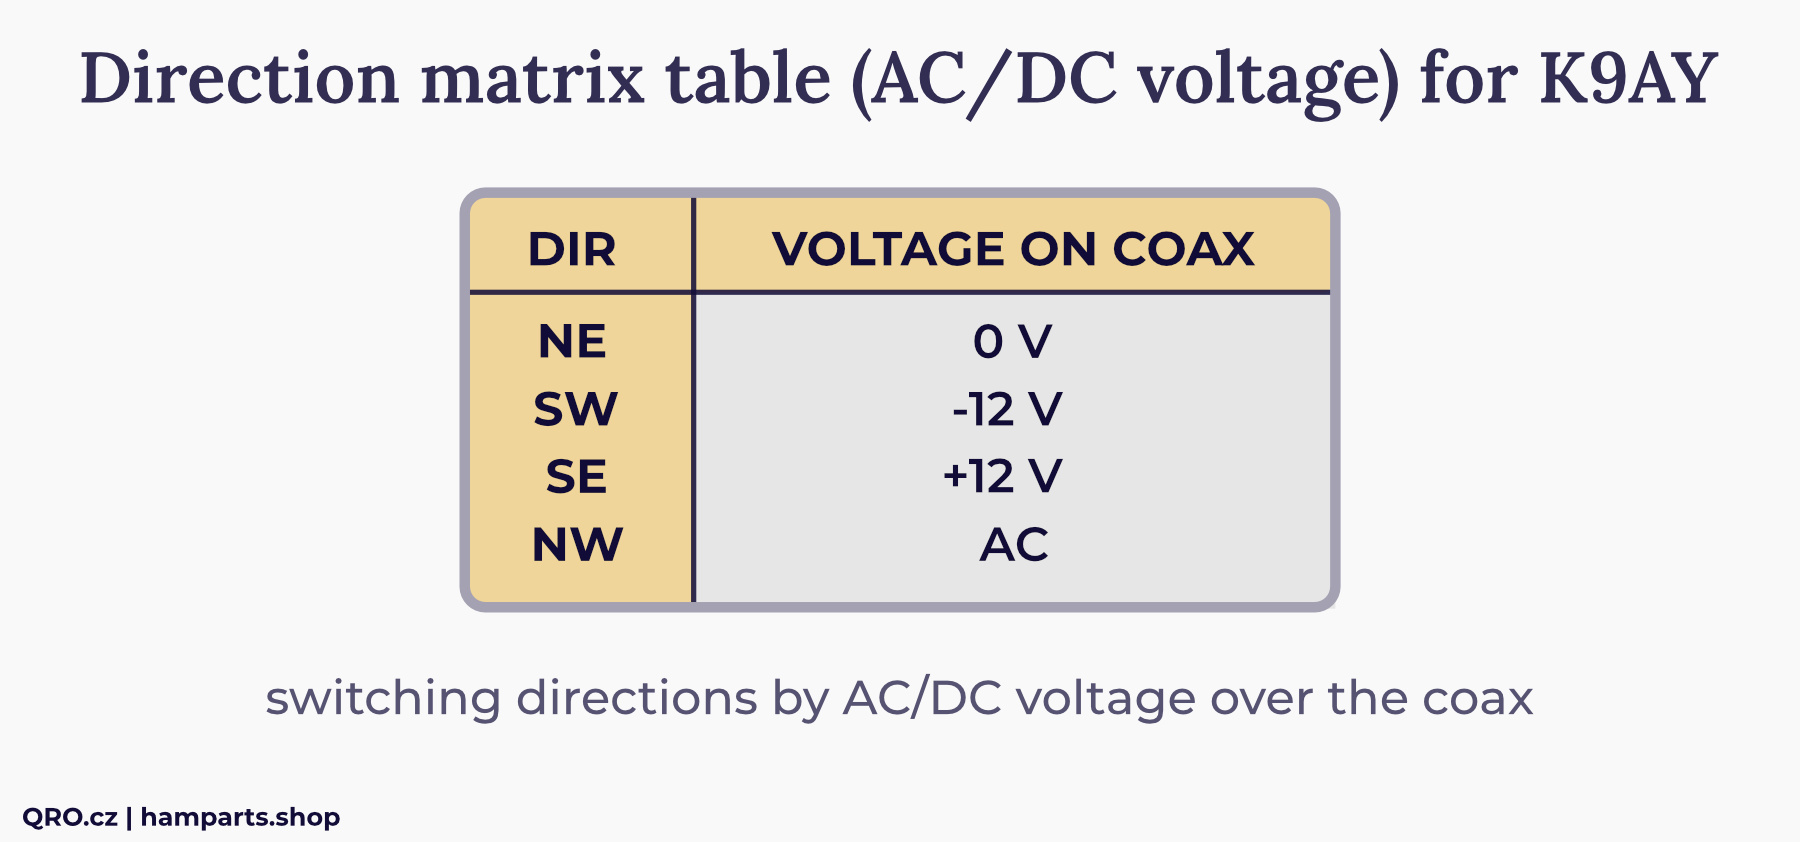 k9ay rx antenna direction matrix table qro.cz hamparts.shop